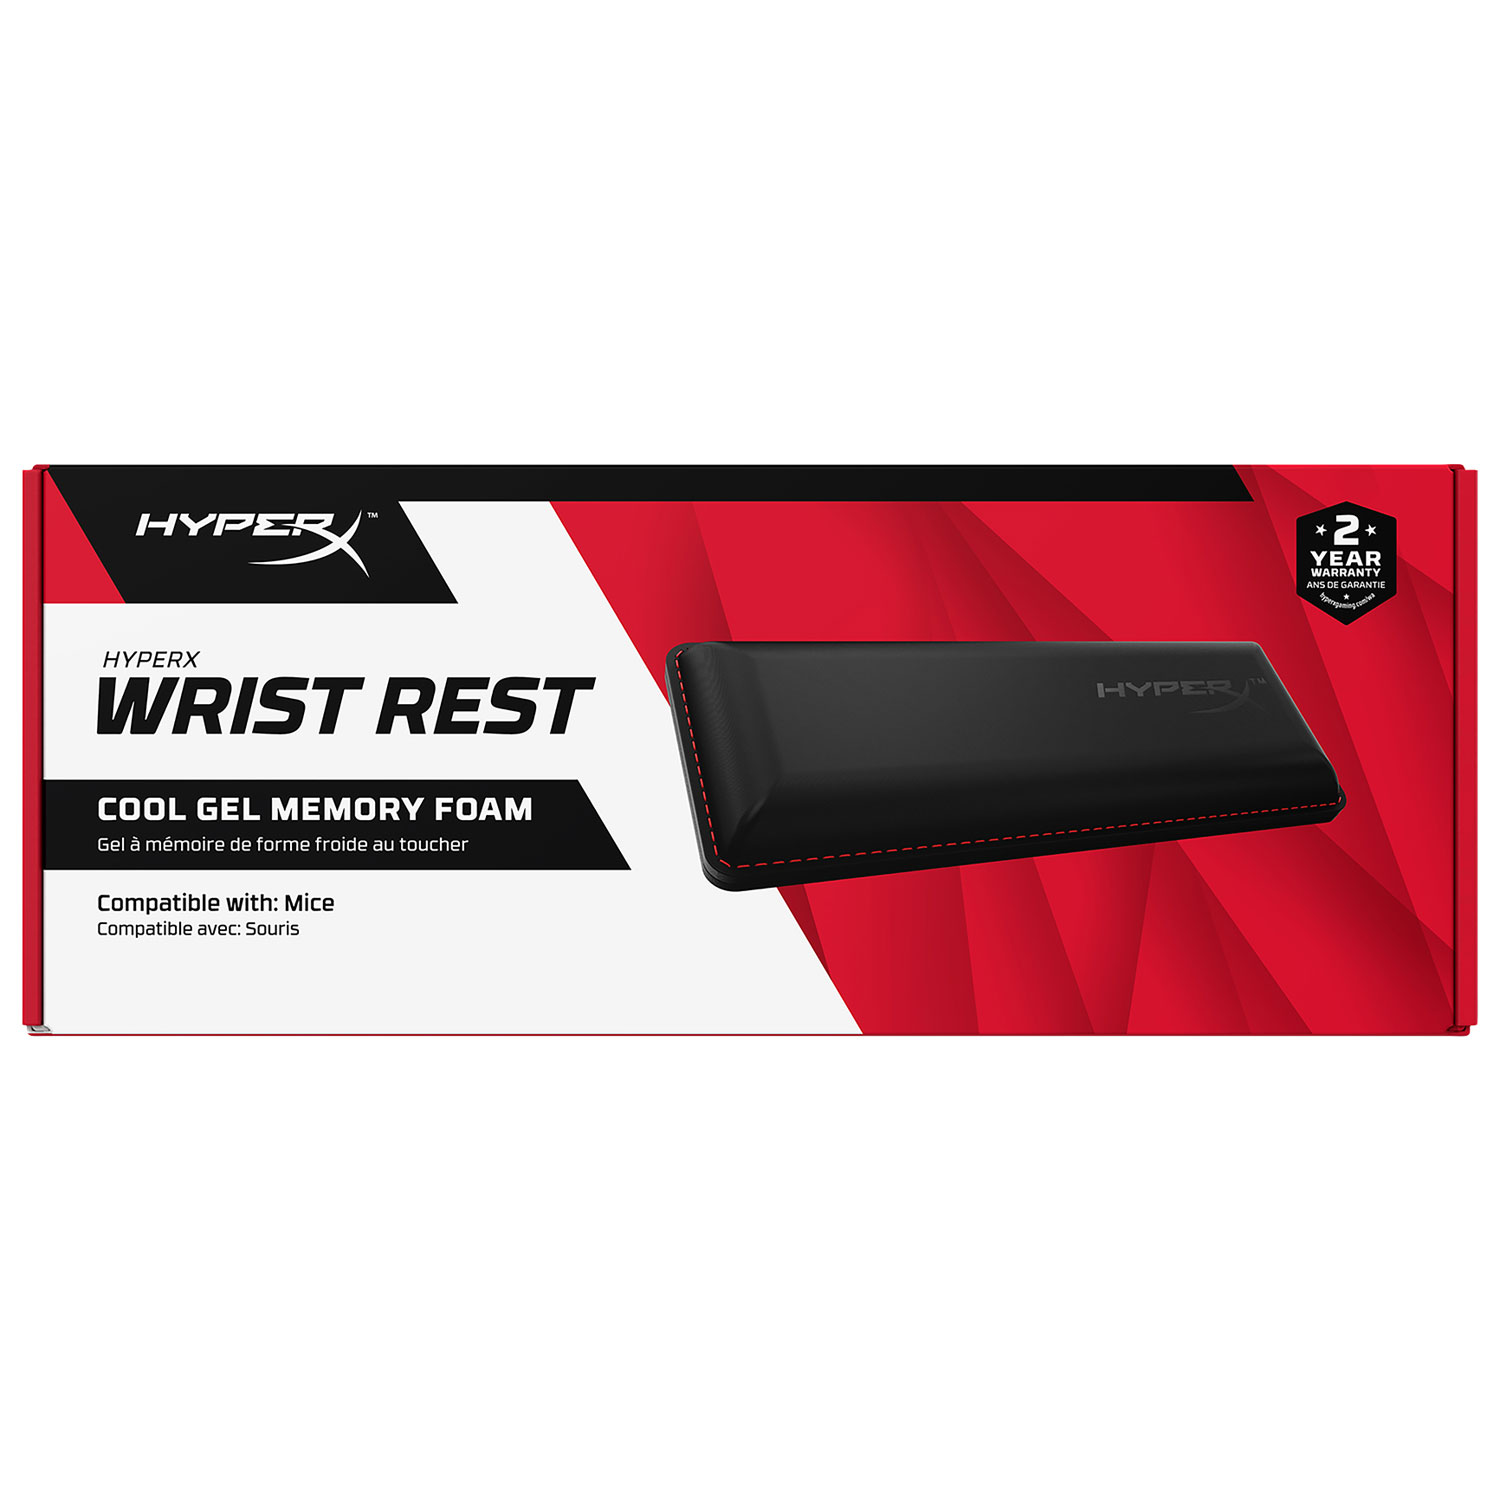 HyperX Cool Gel Memory Foam Wrist Rest for Mouse Pad- Black